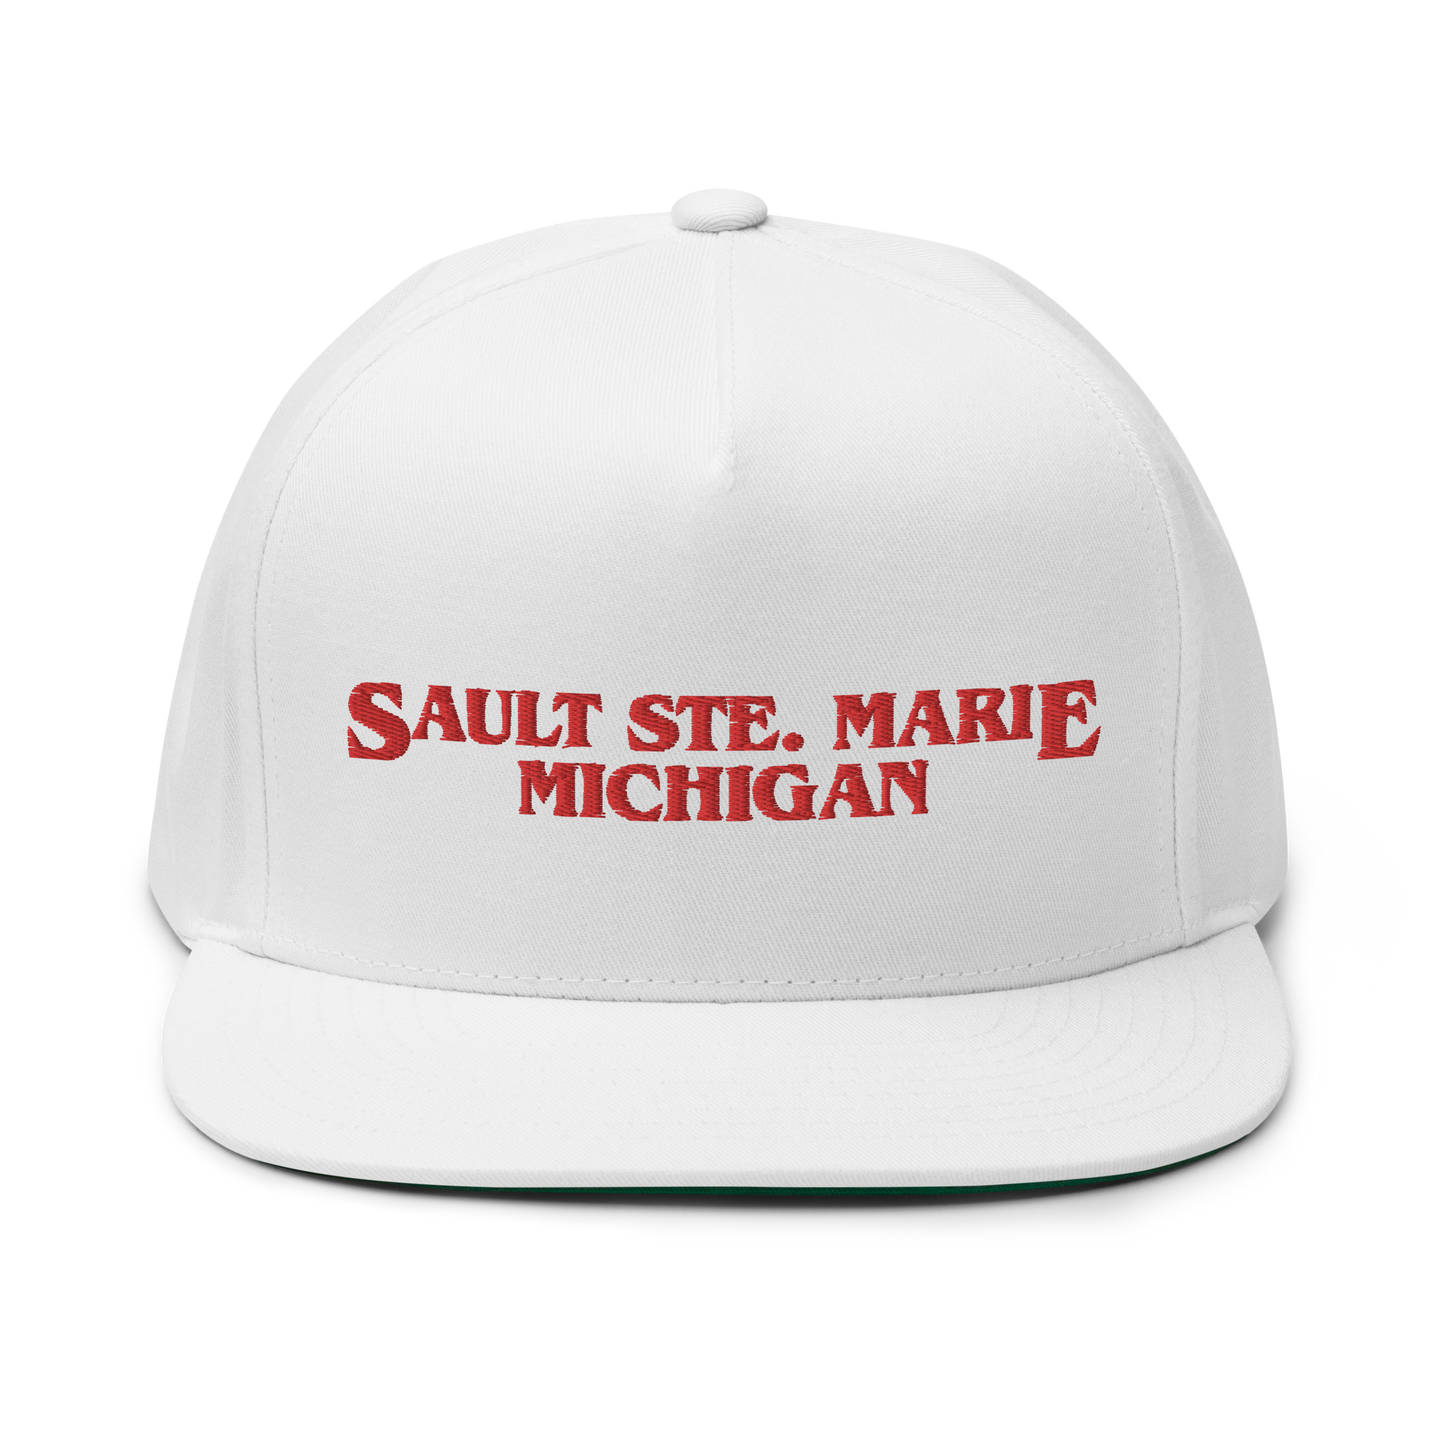 'Sault Ste. Marie' Flat Bill Snapback (1980s Drama Parody)